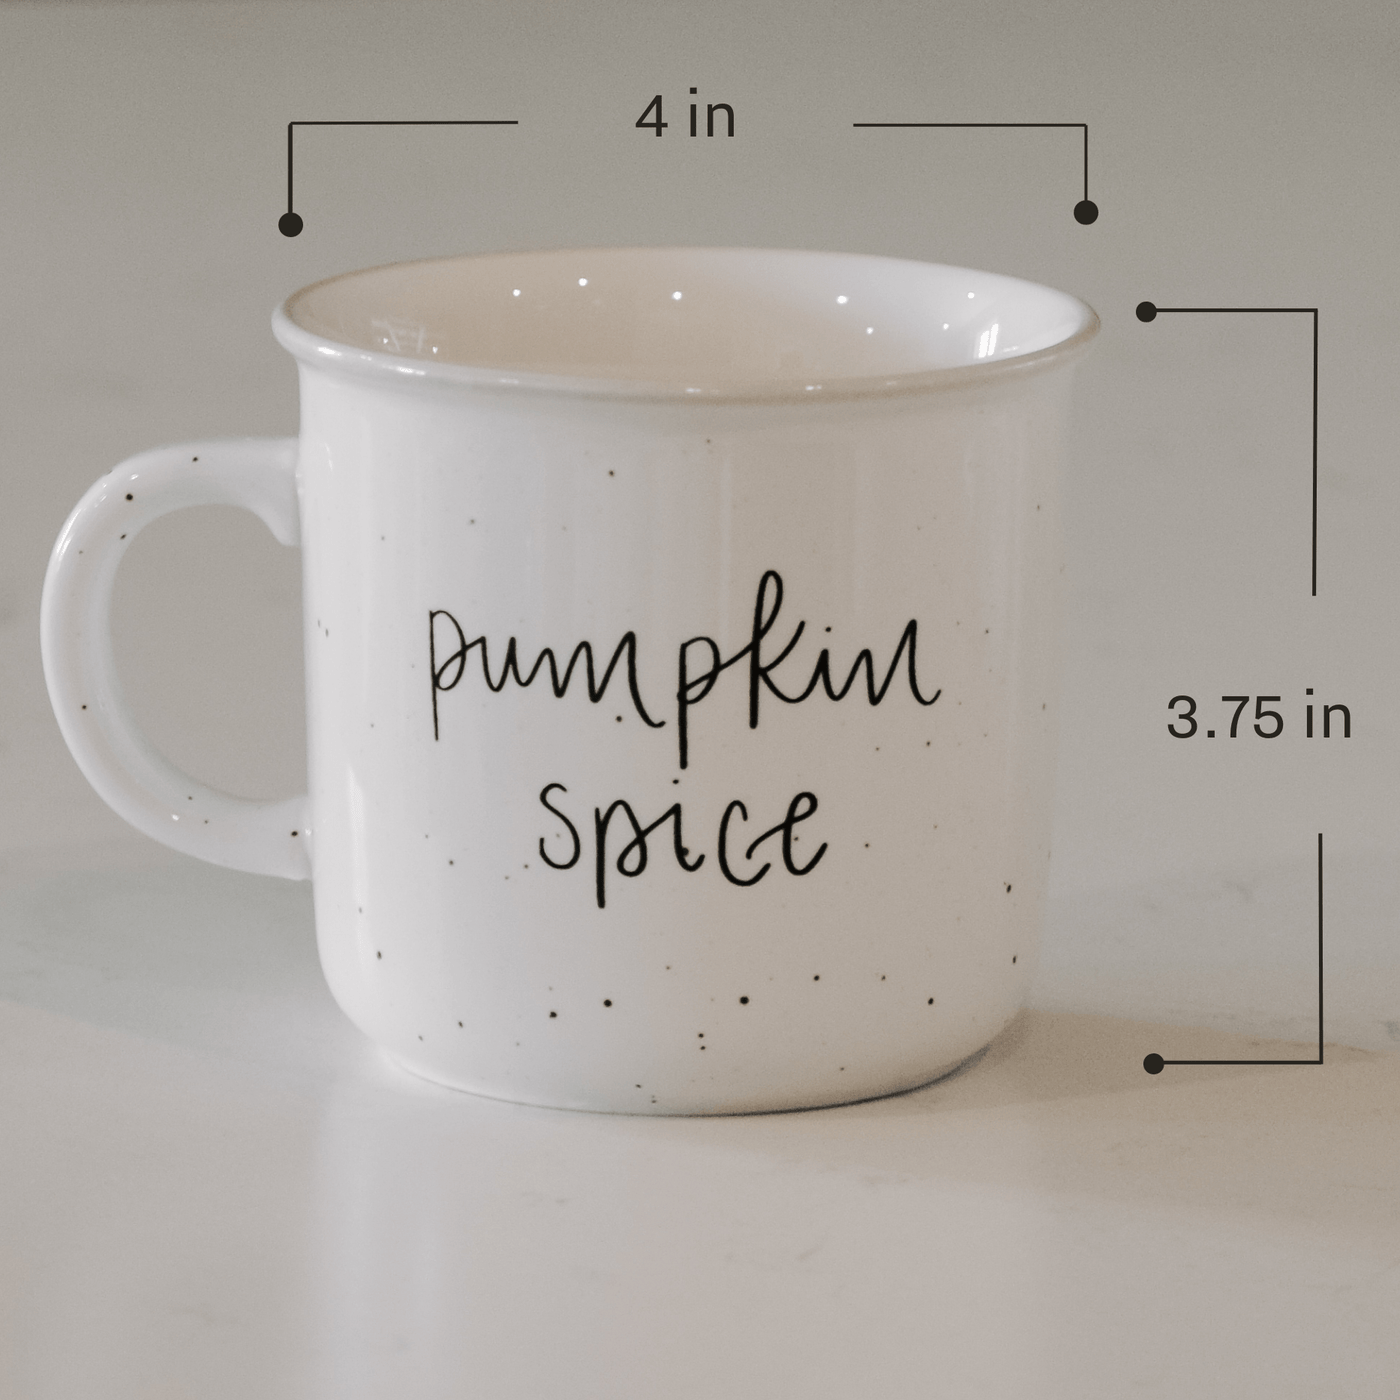 Pumpkin Spice 16oz. Rustic Campfire Coffee Mug - Sweet Water Decor - Coffee Mugs